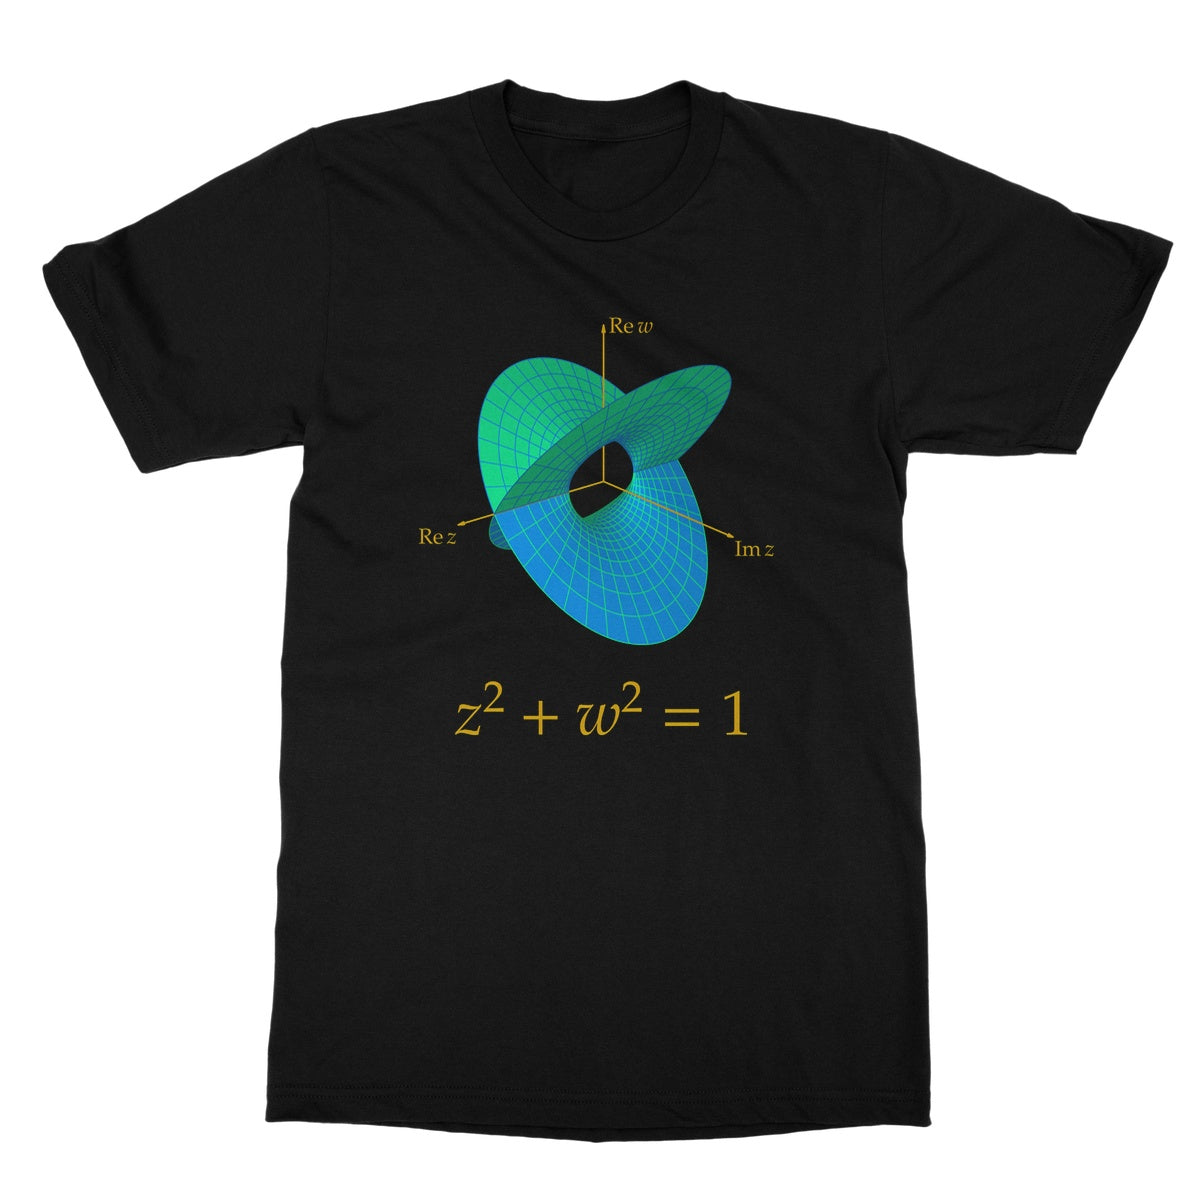 Complex Circle, 2 Slits Softstyle T-Shirt